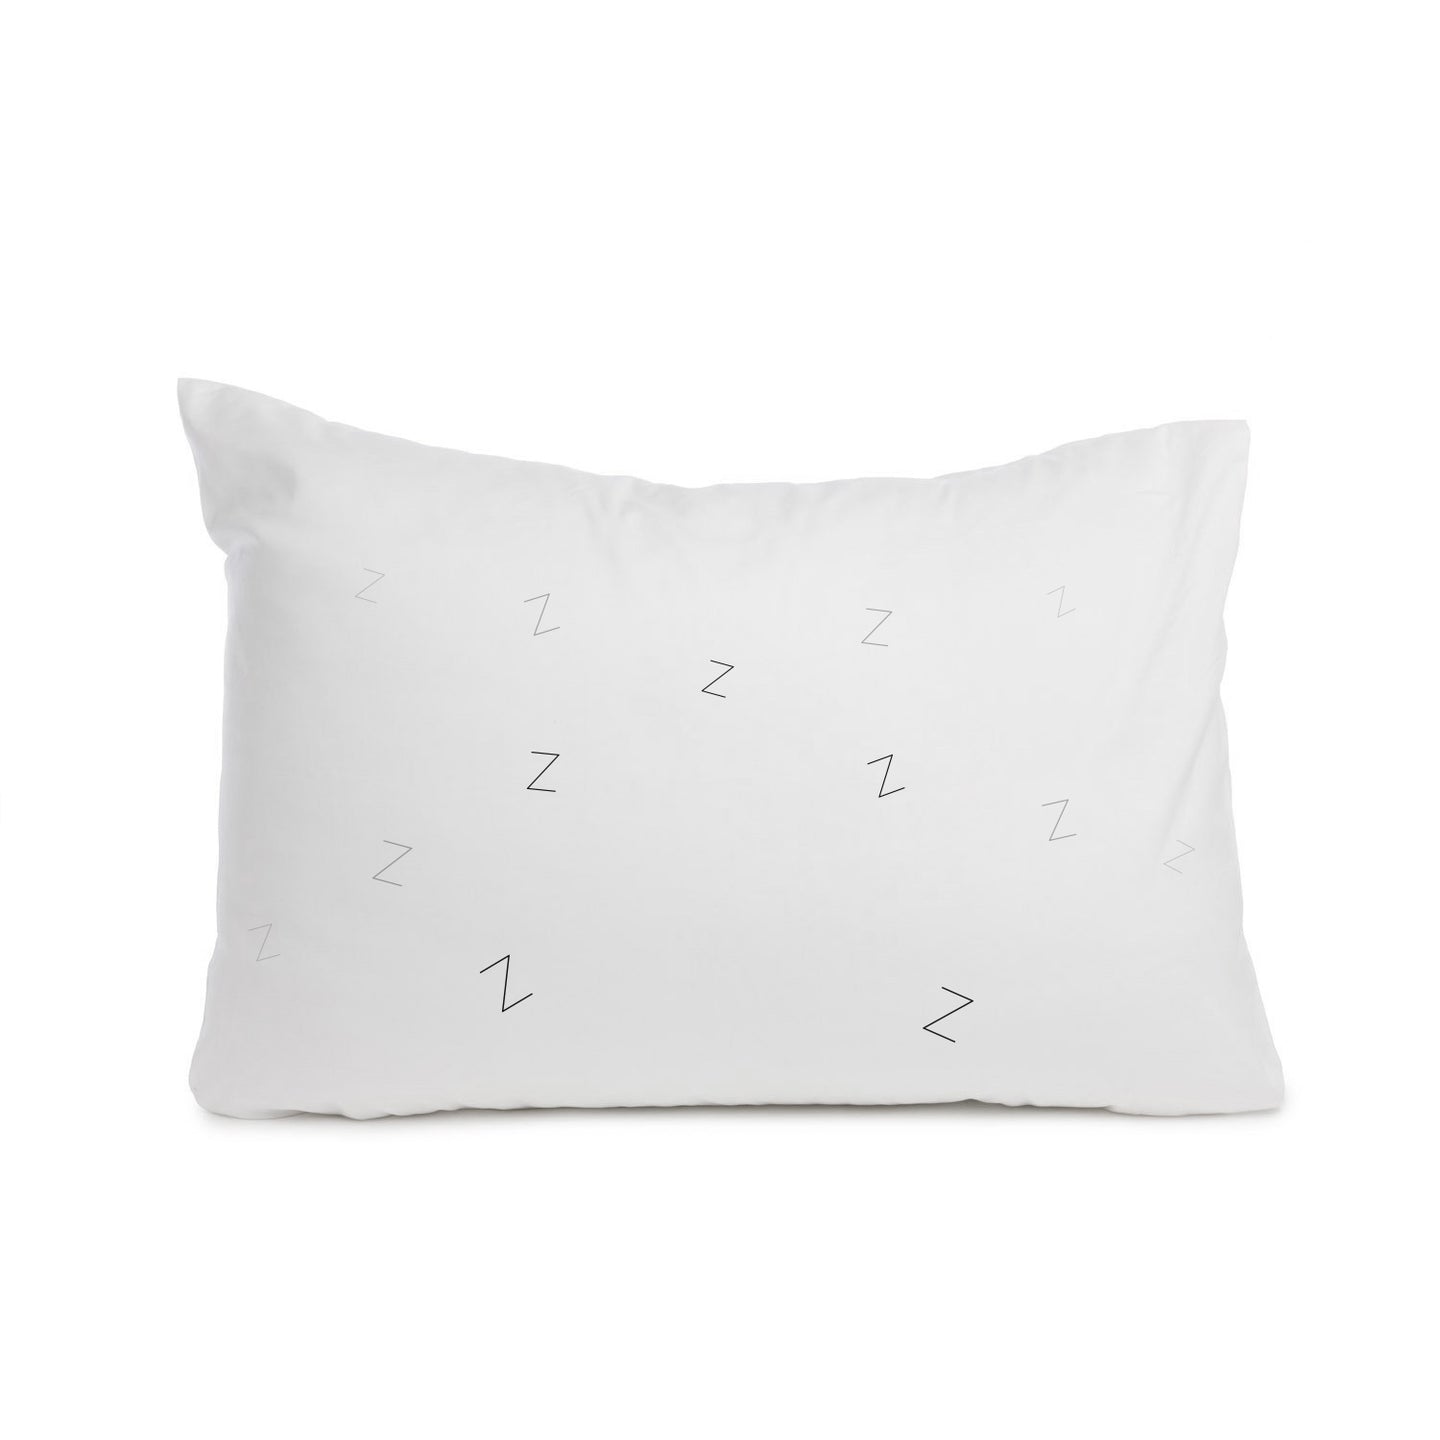 Zzz pillowcase. Cot bed or Standard size - Meretant Decor